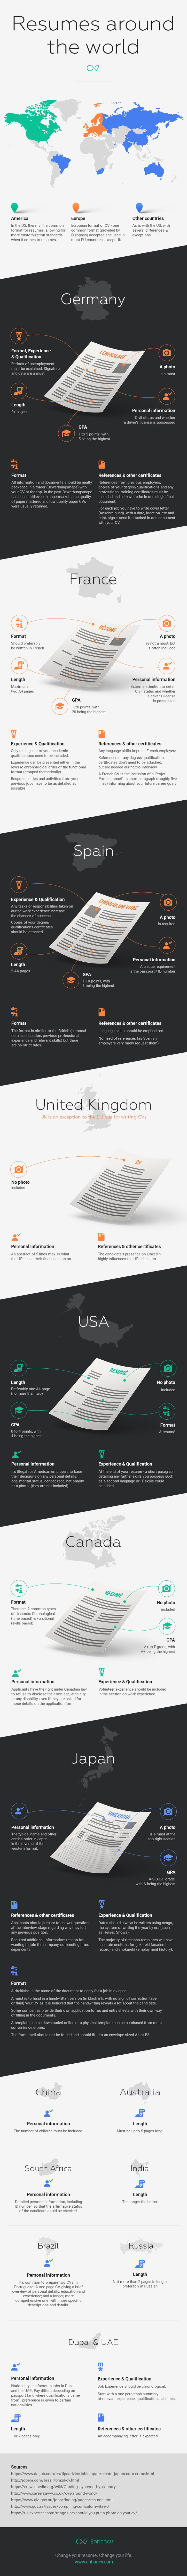 Enhancv Infographic: Resumes Around The World 